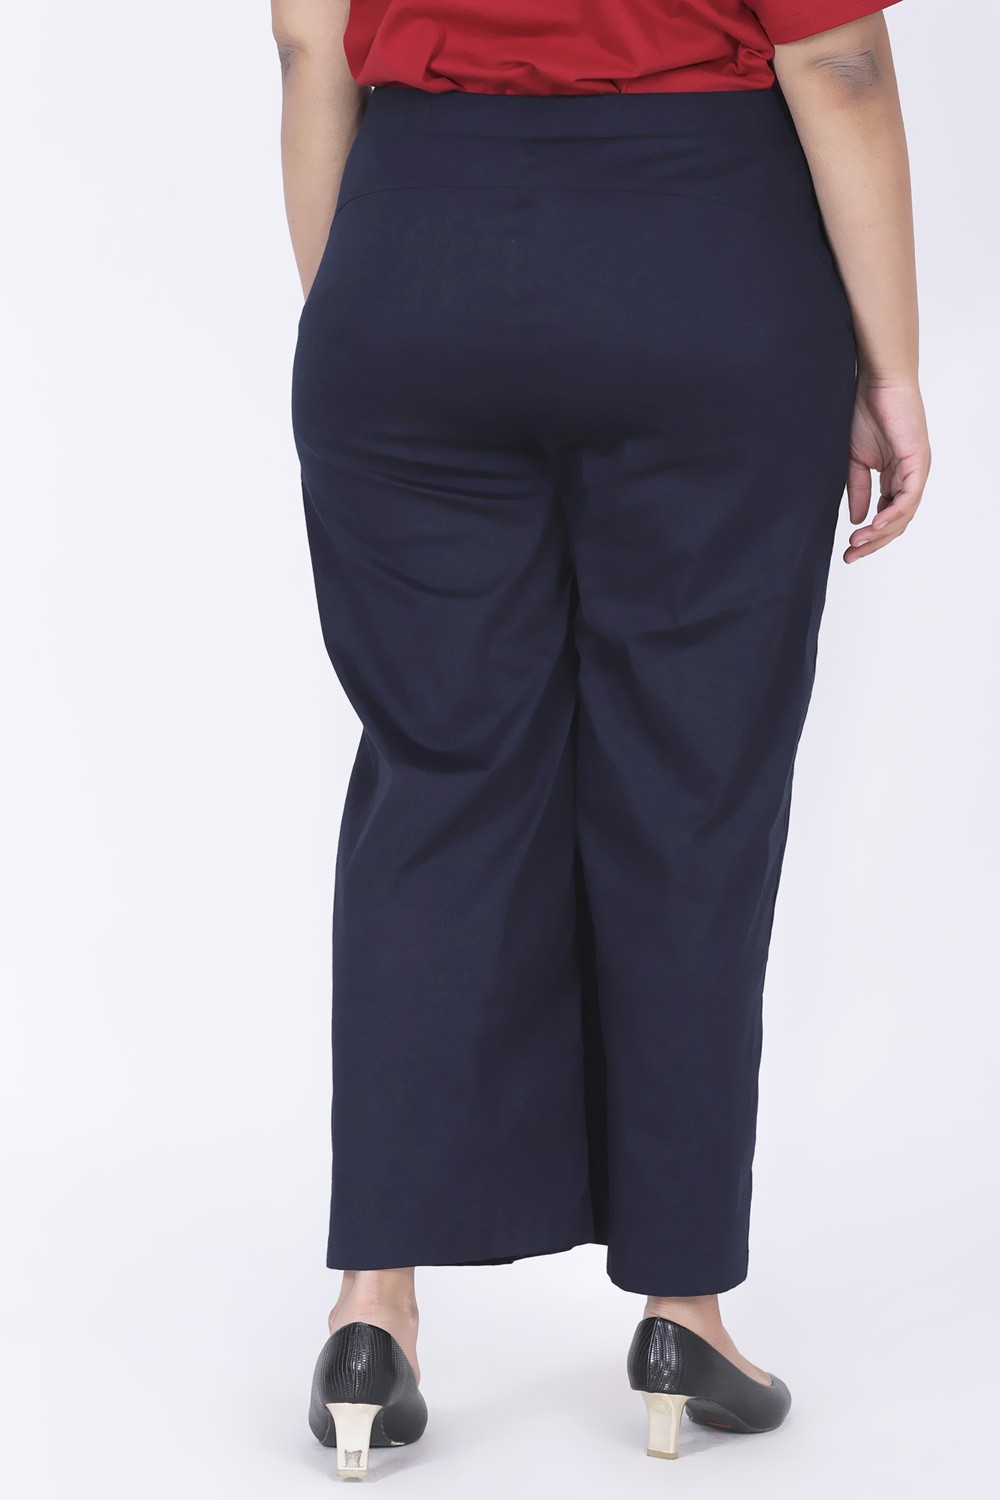 Lastinch Women's Plus Size Cotton Blue Printed Trouser (XXX-Large) –  NavaStreet - Europe